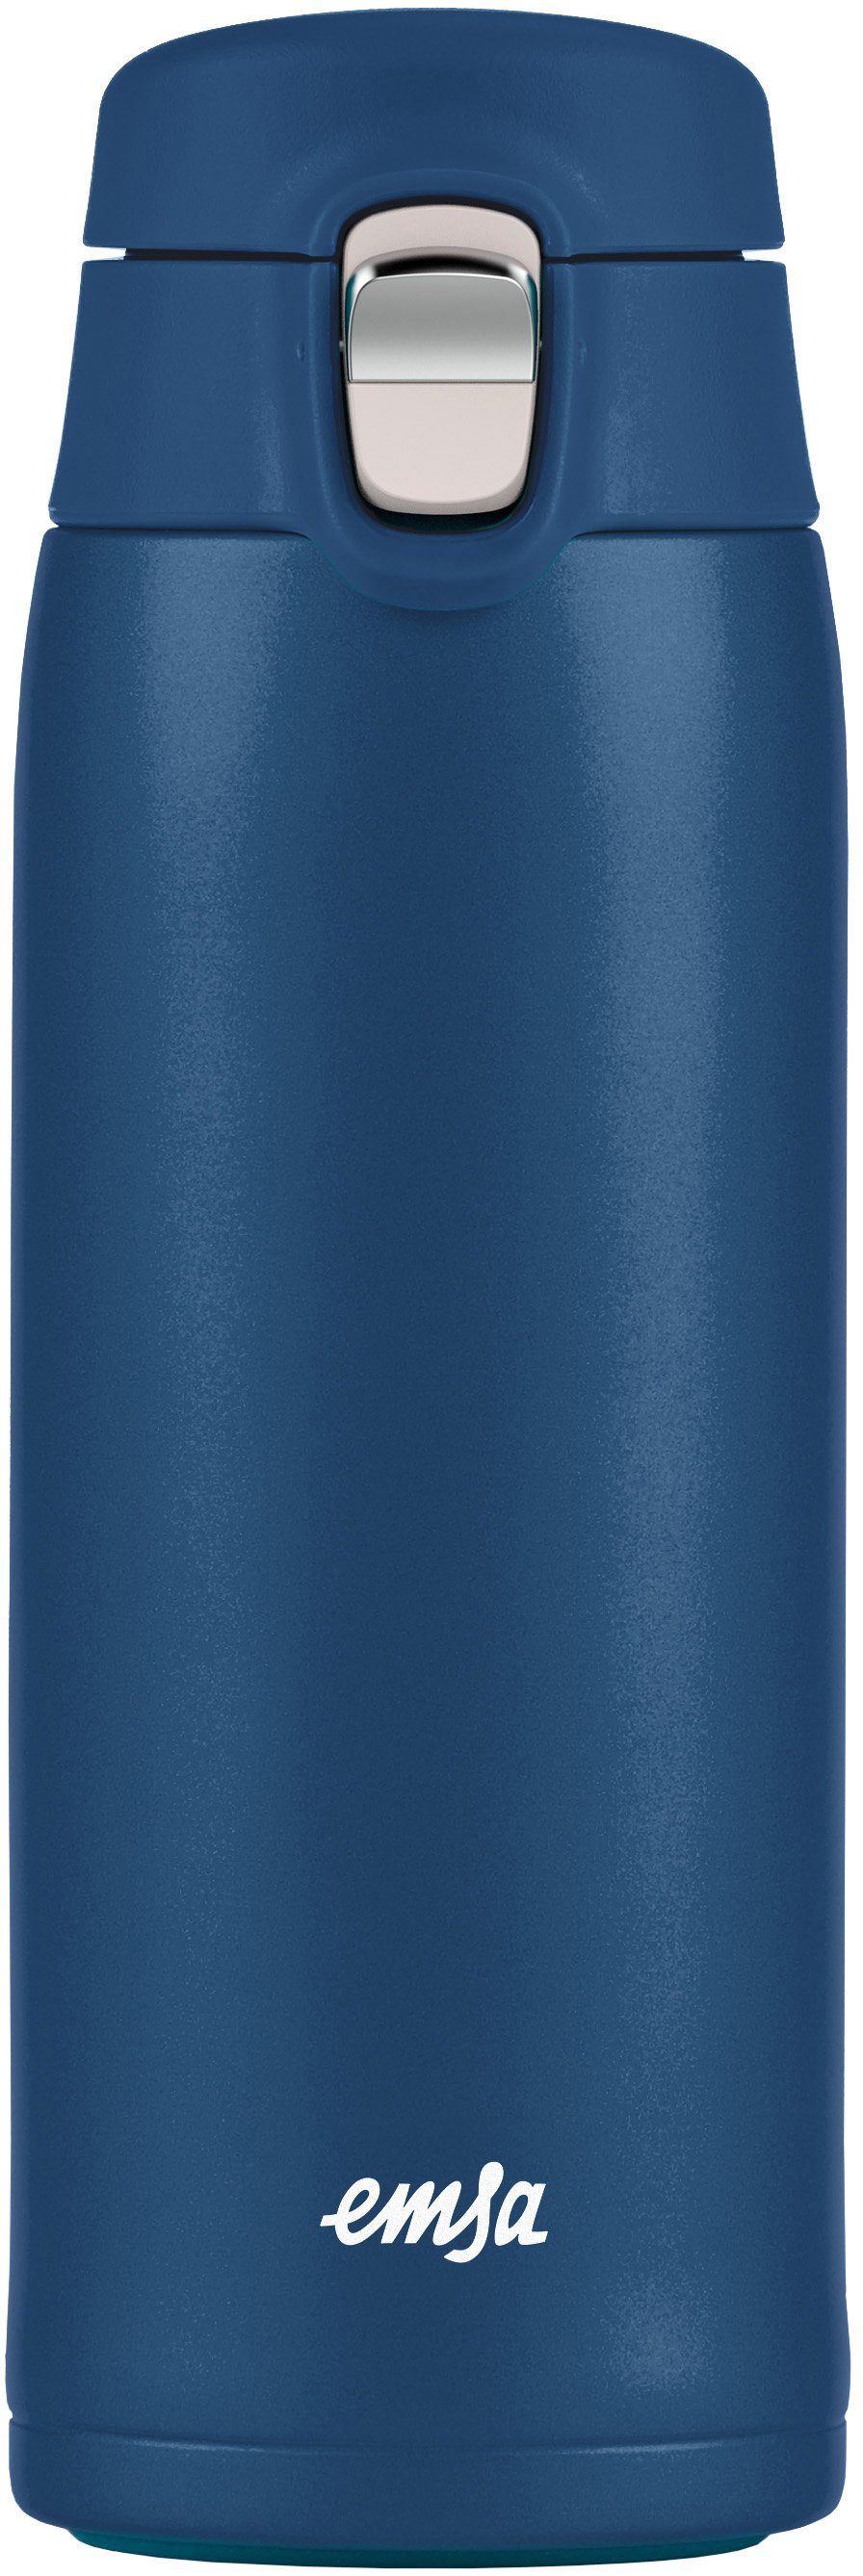 Emsa Thermobecher Travel Mug Light, Edelstahl, Kunststoff, 0,4L, Edelstahl, 100% dicht, 8h warm/16h kalt blau